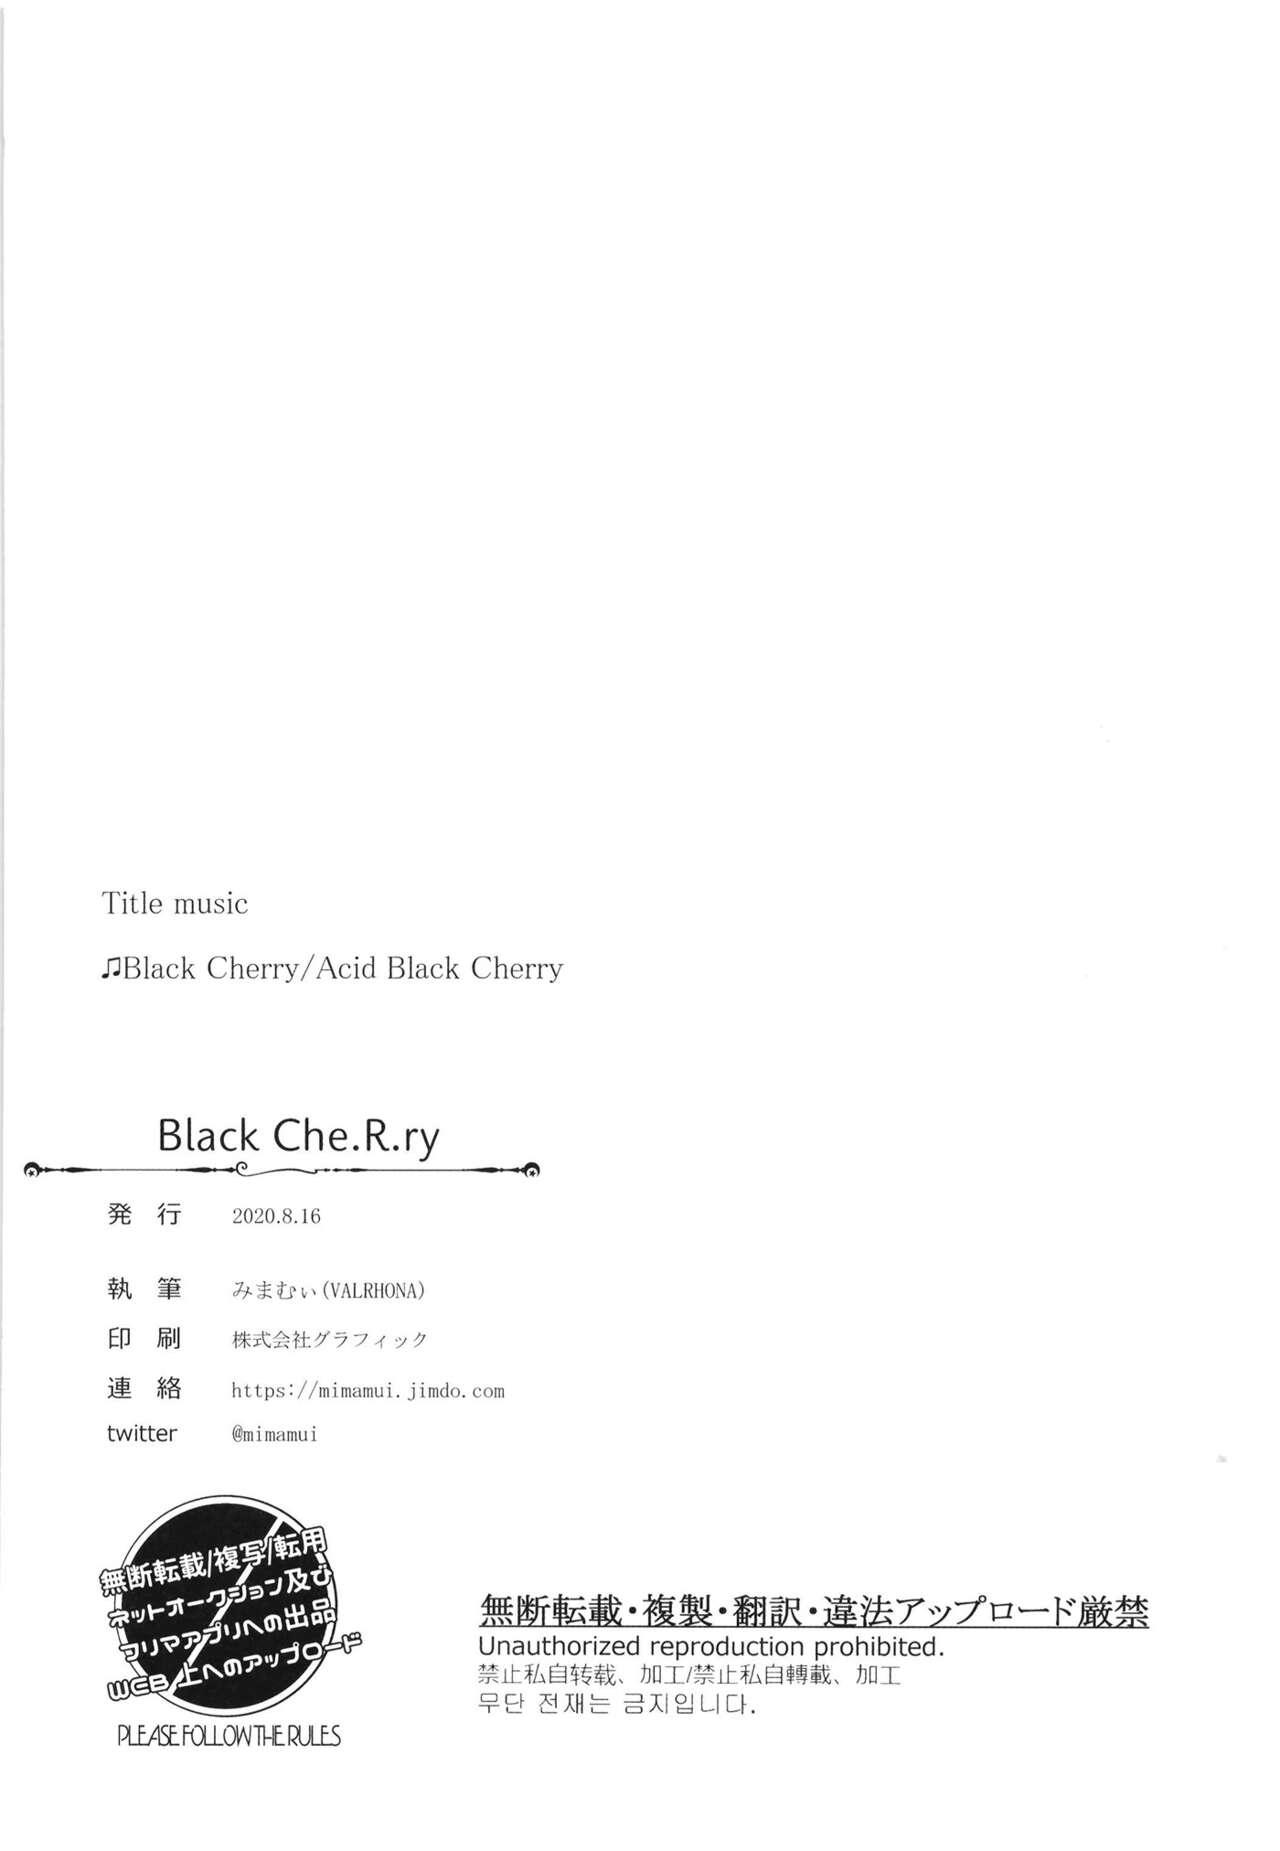 Black Che.R.ry 20